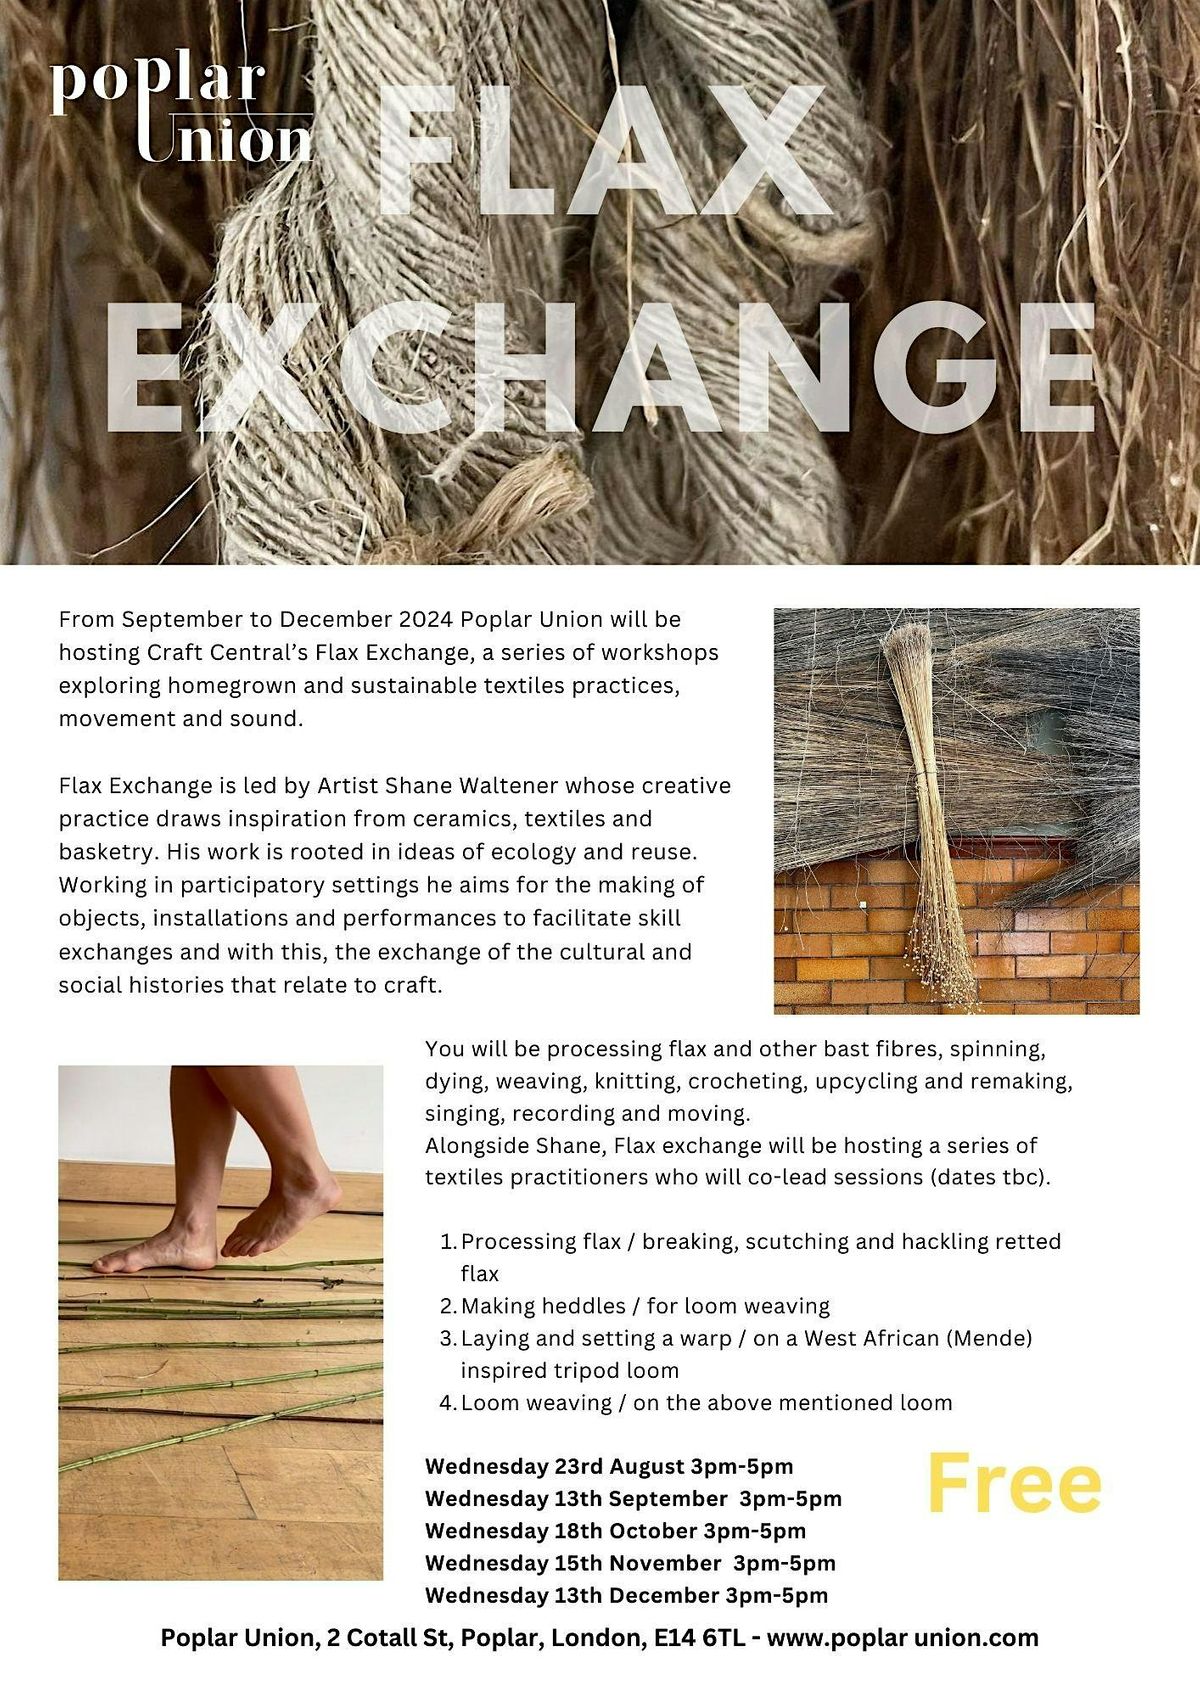 Flax exchange - Free workshop